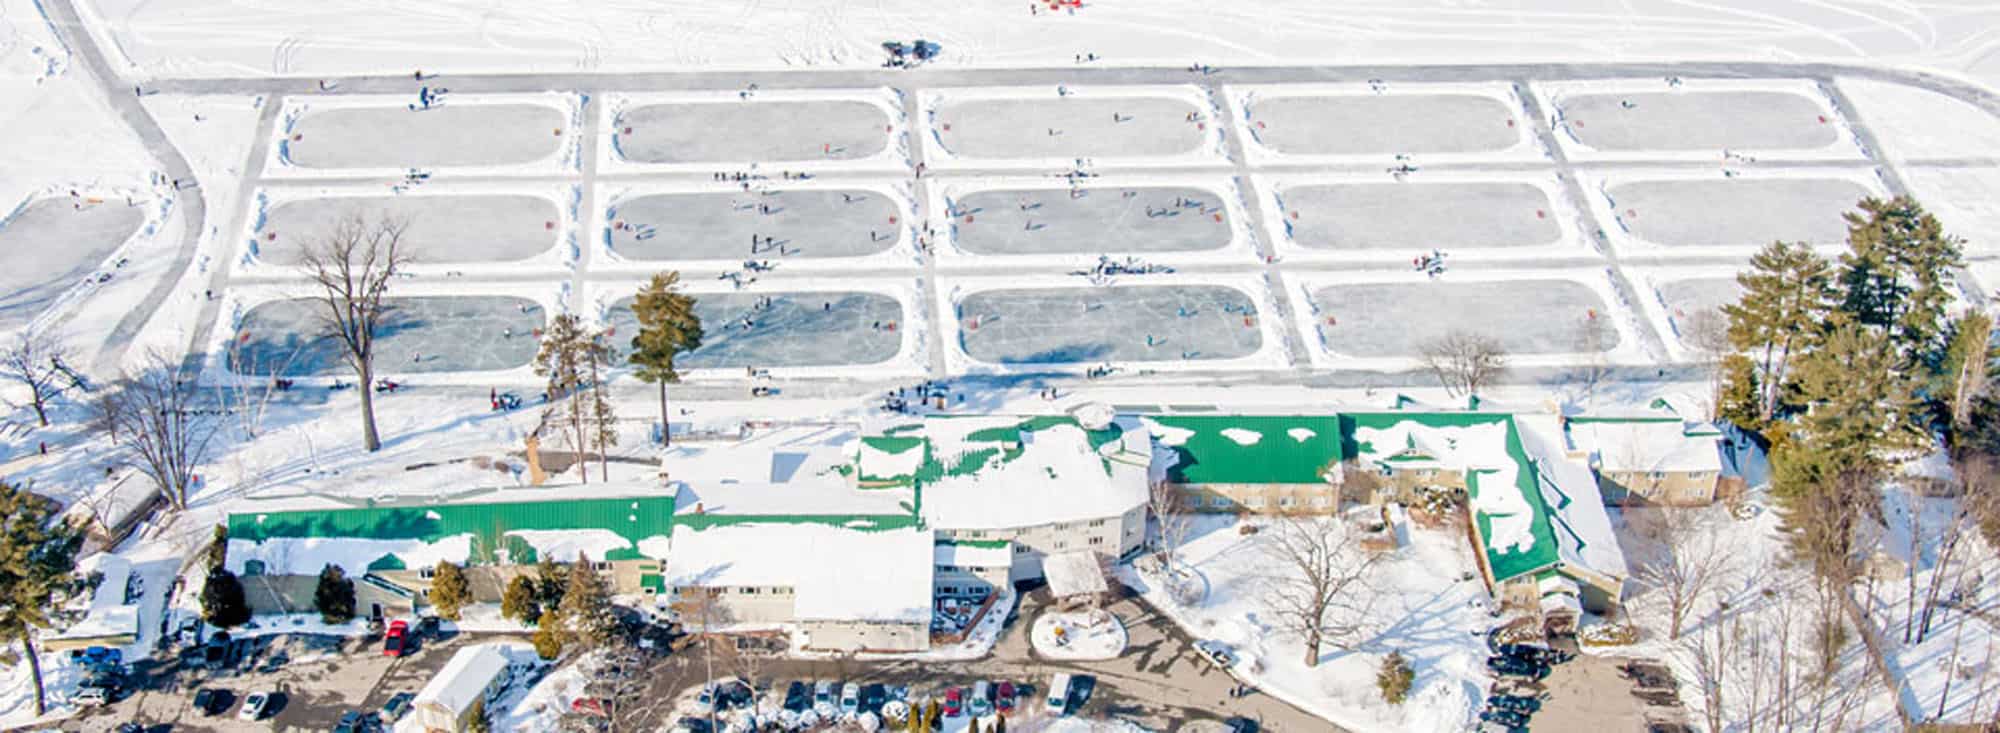 Lake Morey Resort - Winter Pond Hockey Aerial View